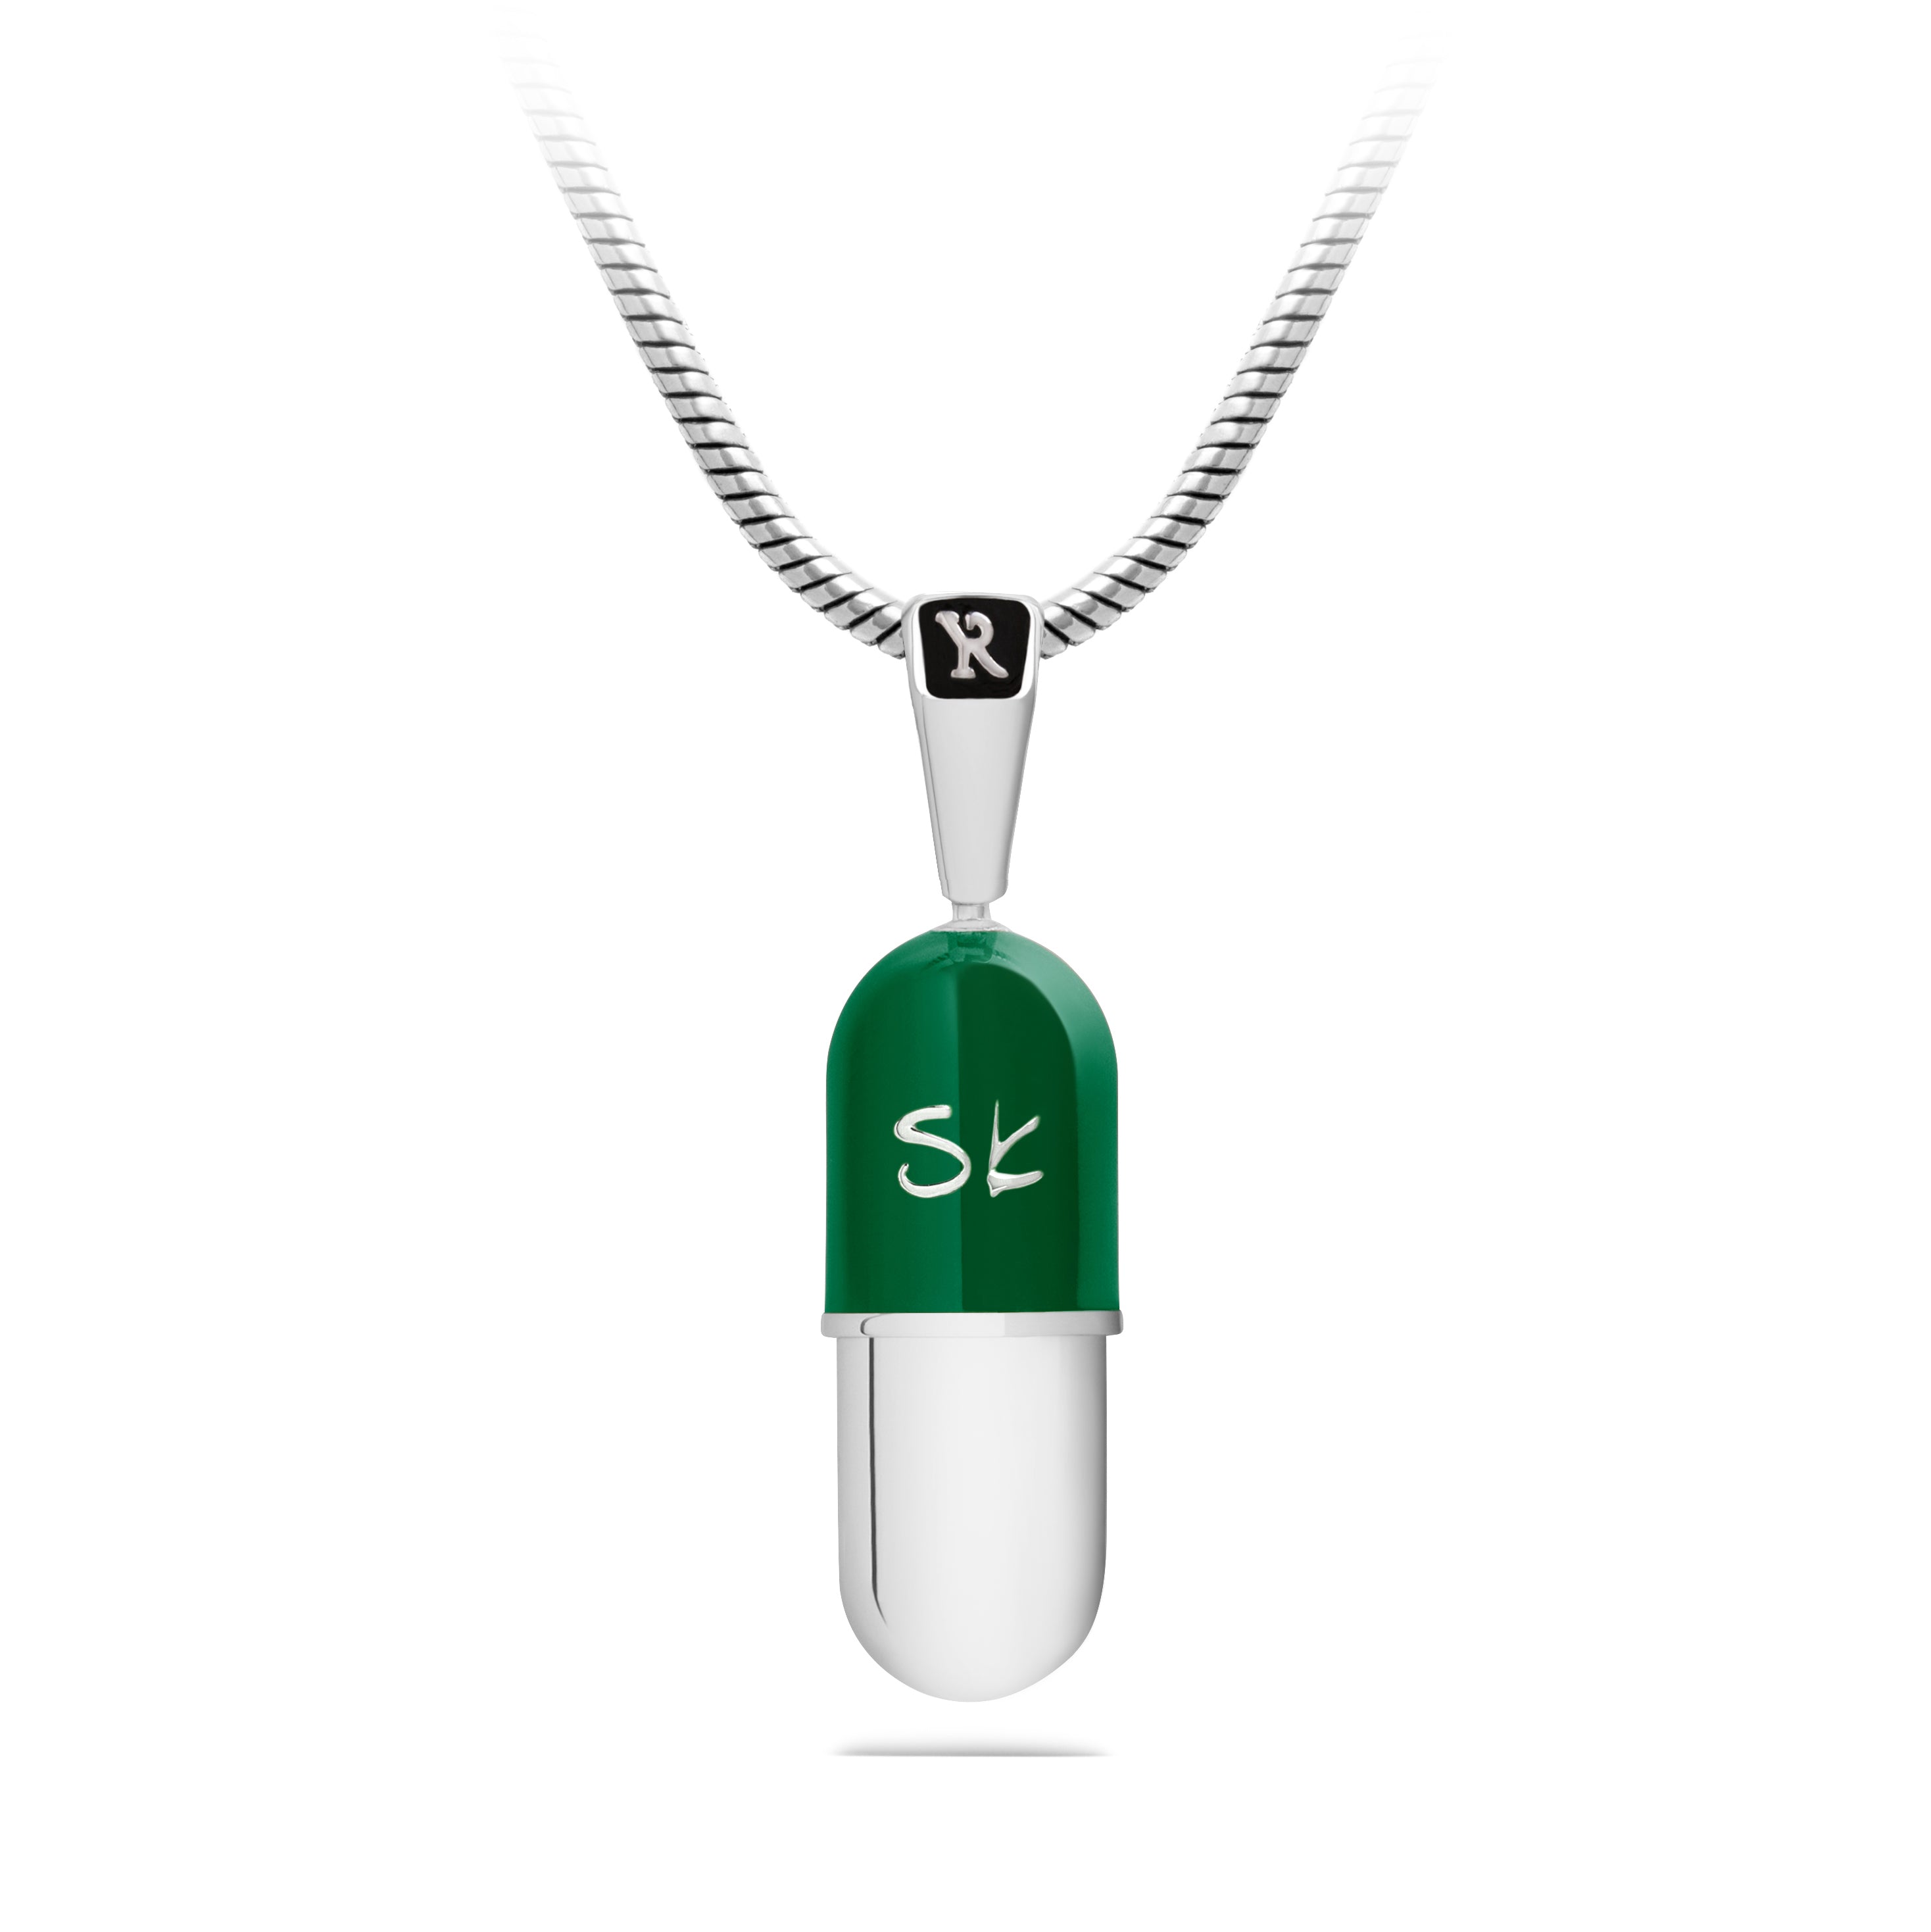 50 mg of Hope Capsule Pendant, Sterling Silver, Green Top by Yohan Rodrigani